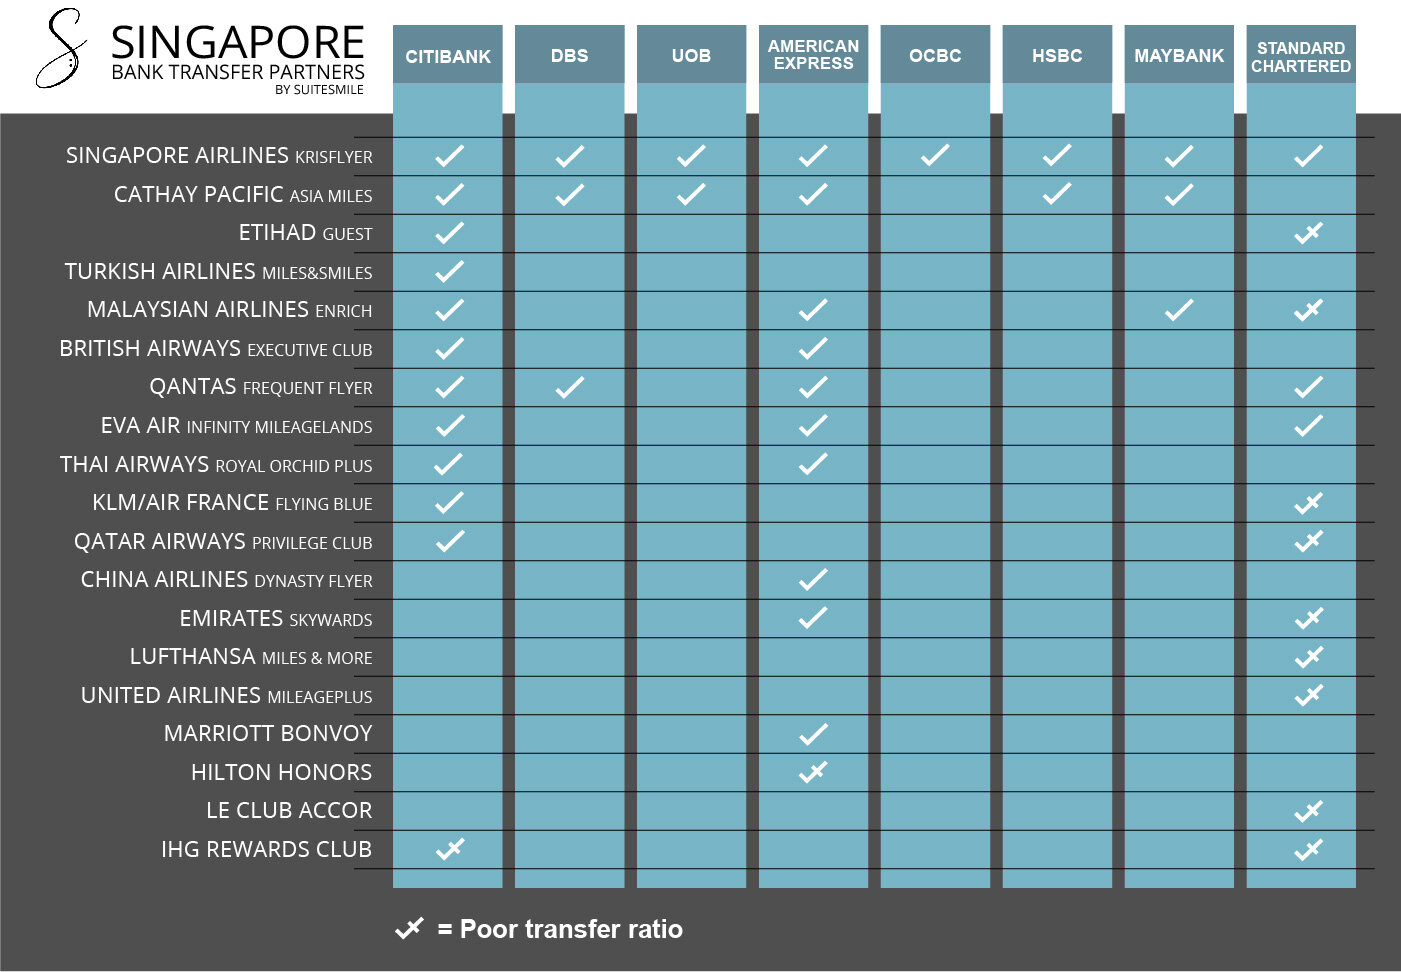 Singapore bank transfer partners